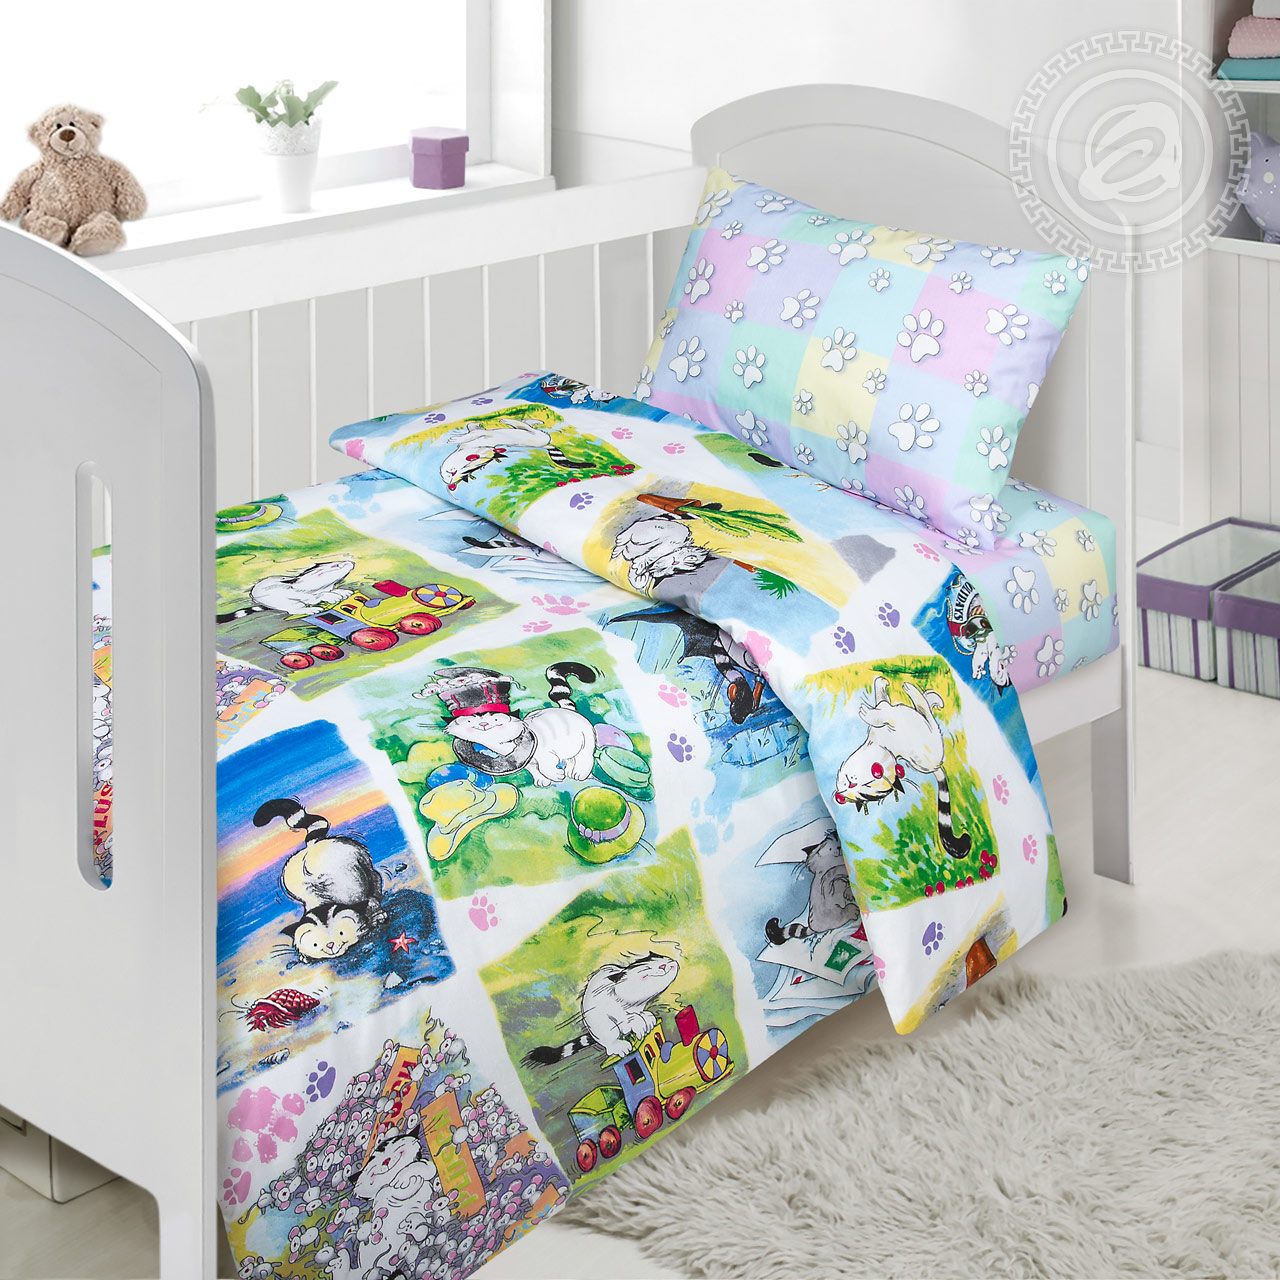 Children's Clearance Junior Toddler Cot Bed Duvet Cover & Pillowcase Sets 